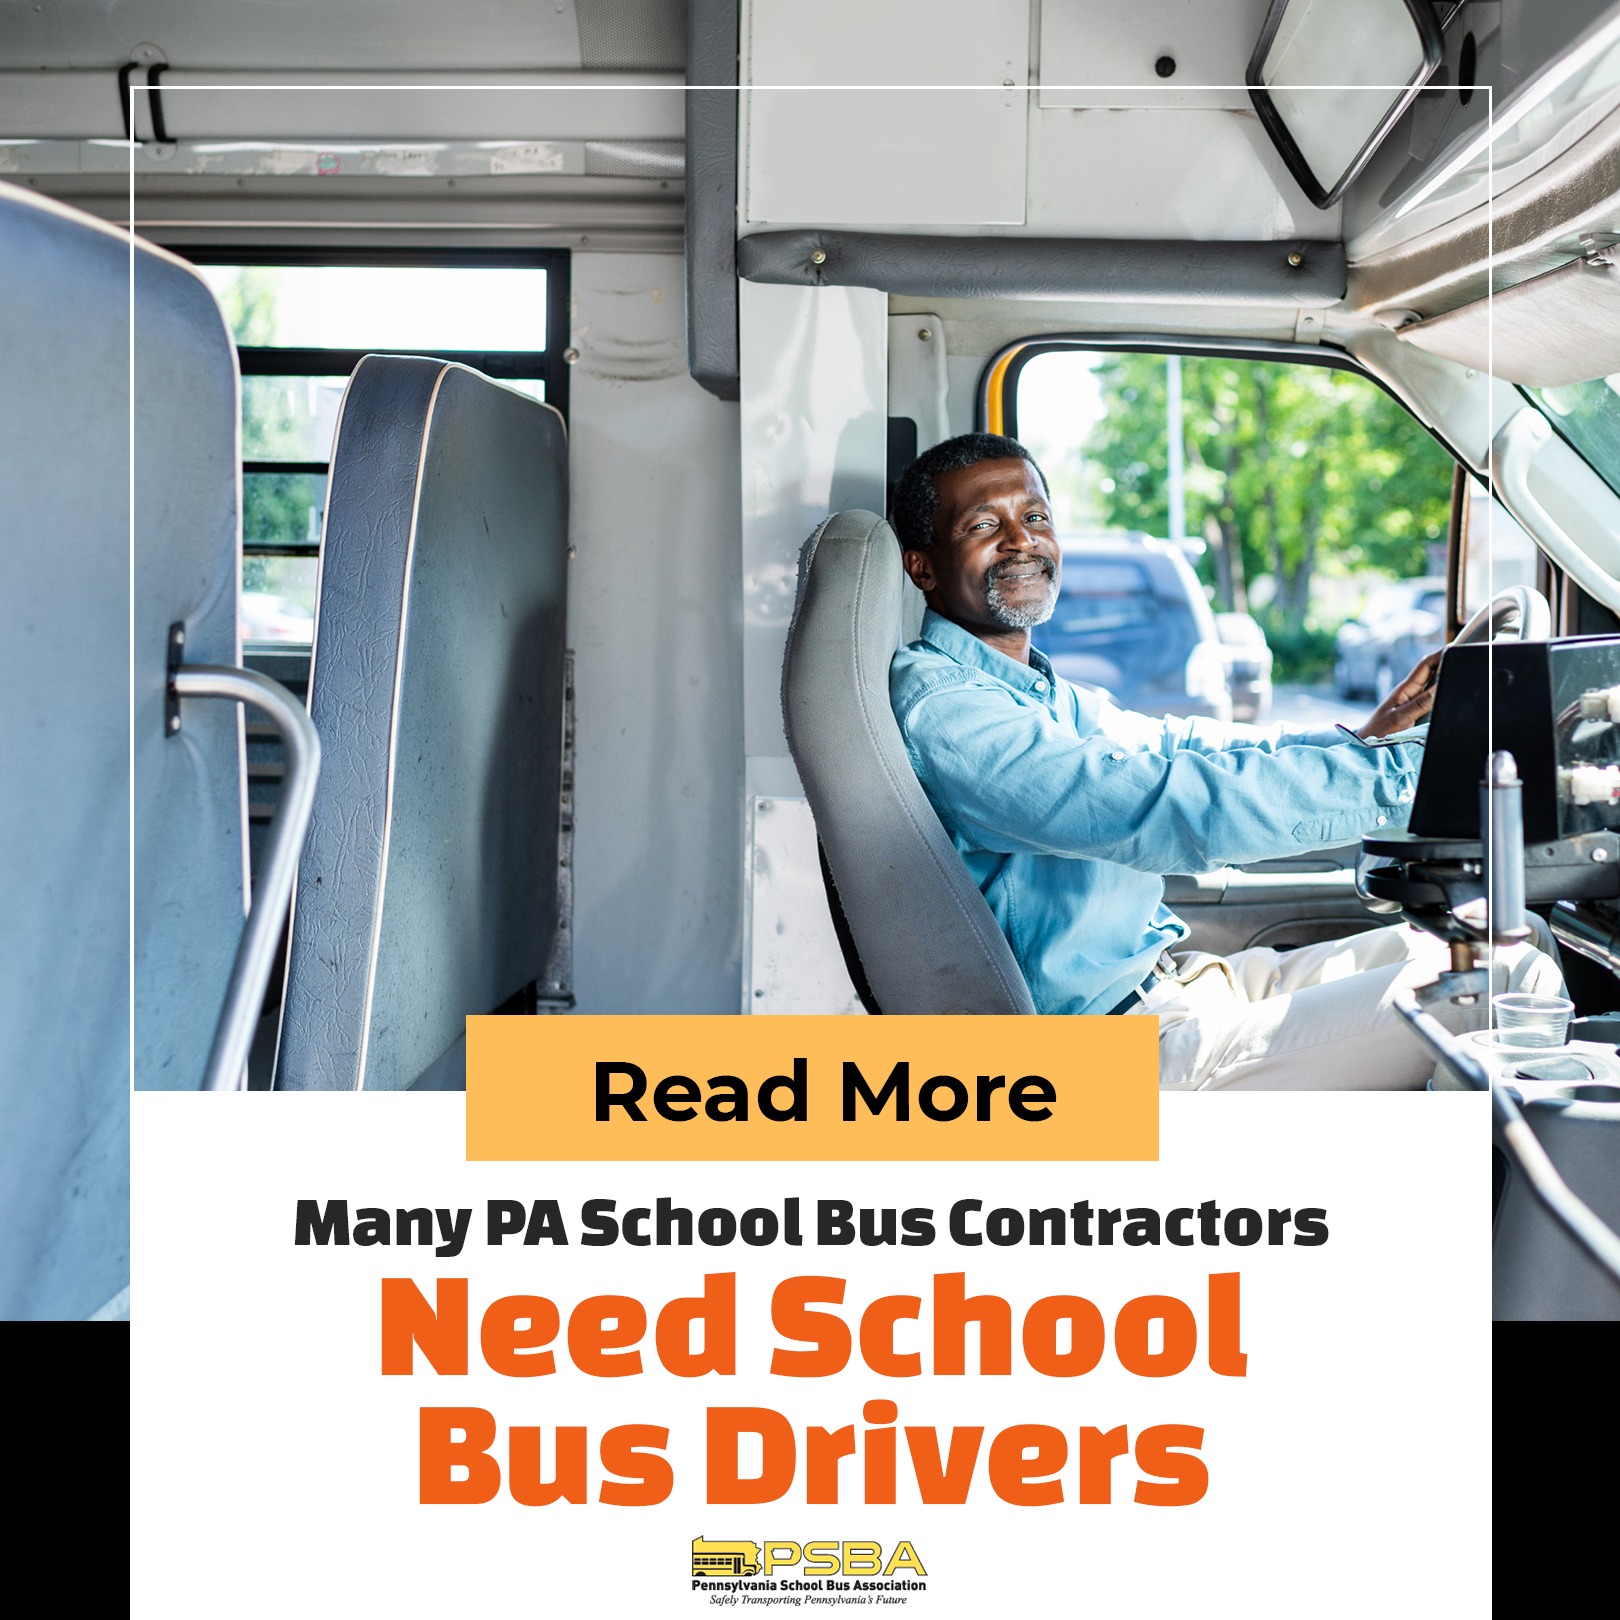 Many PA School Bus Contractors Need School Bus Drivers